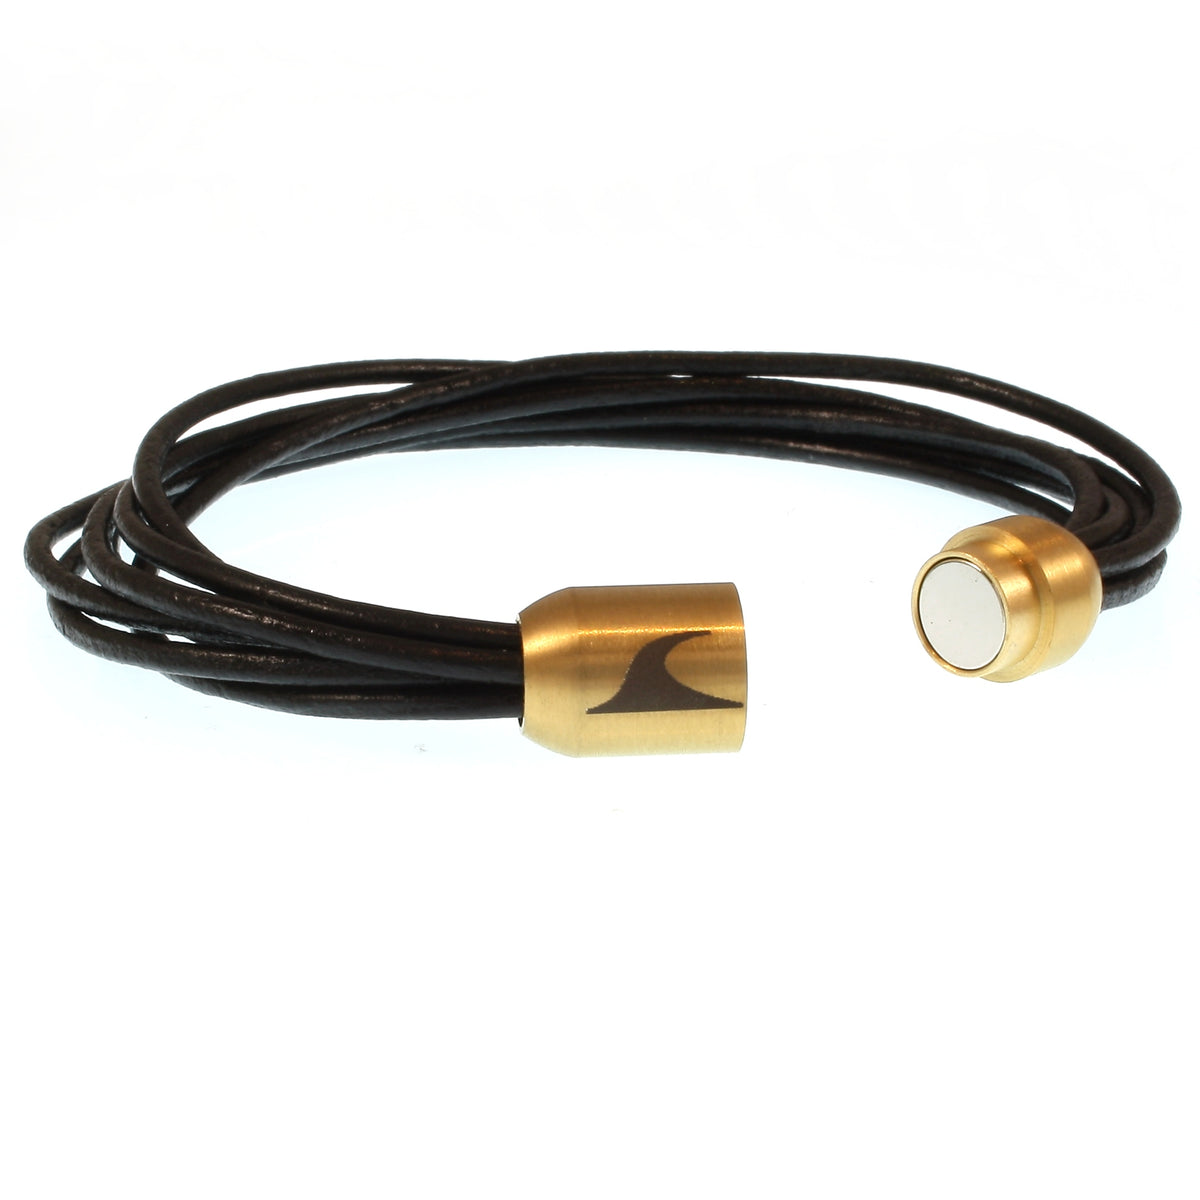 Damen-Leder-armband-fem-schwarz-gold-Edelstahlverschluss-offen-wavepirate-shop-r